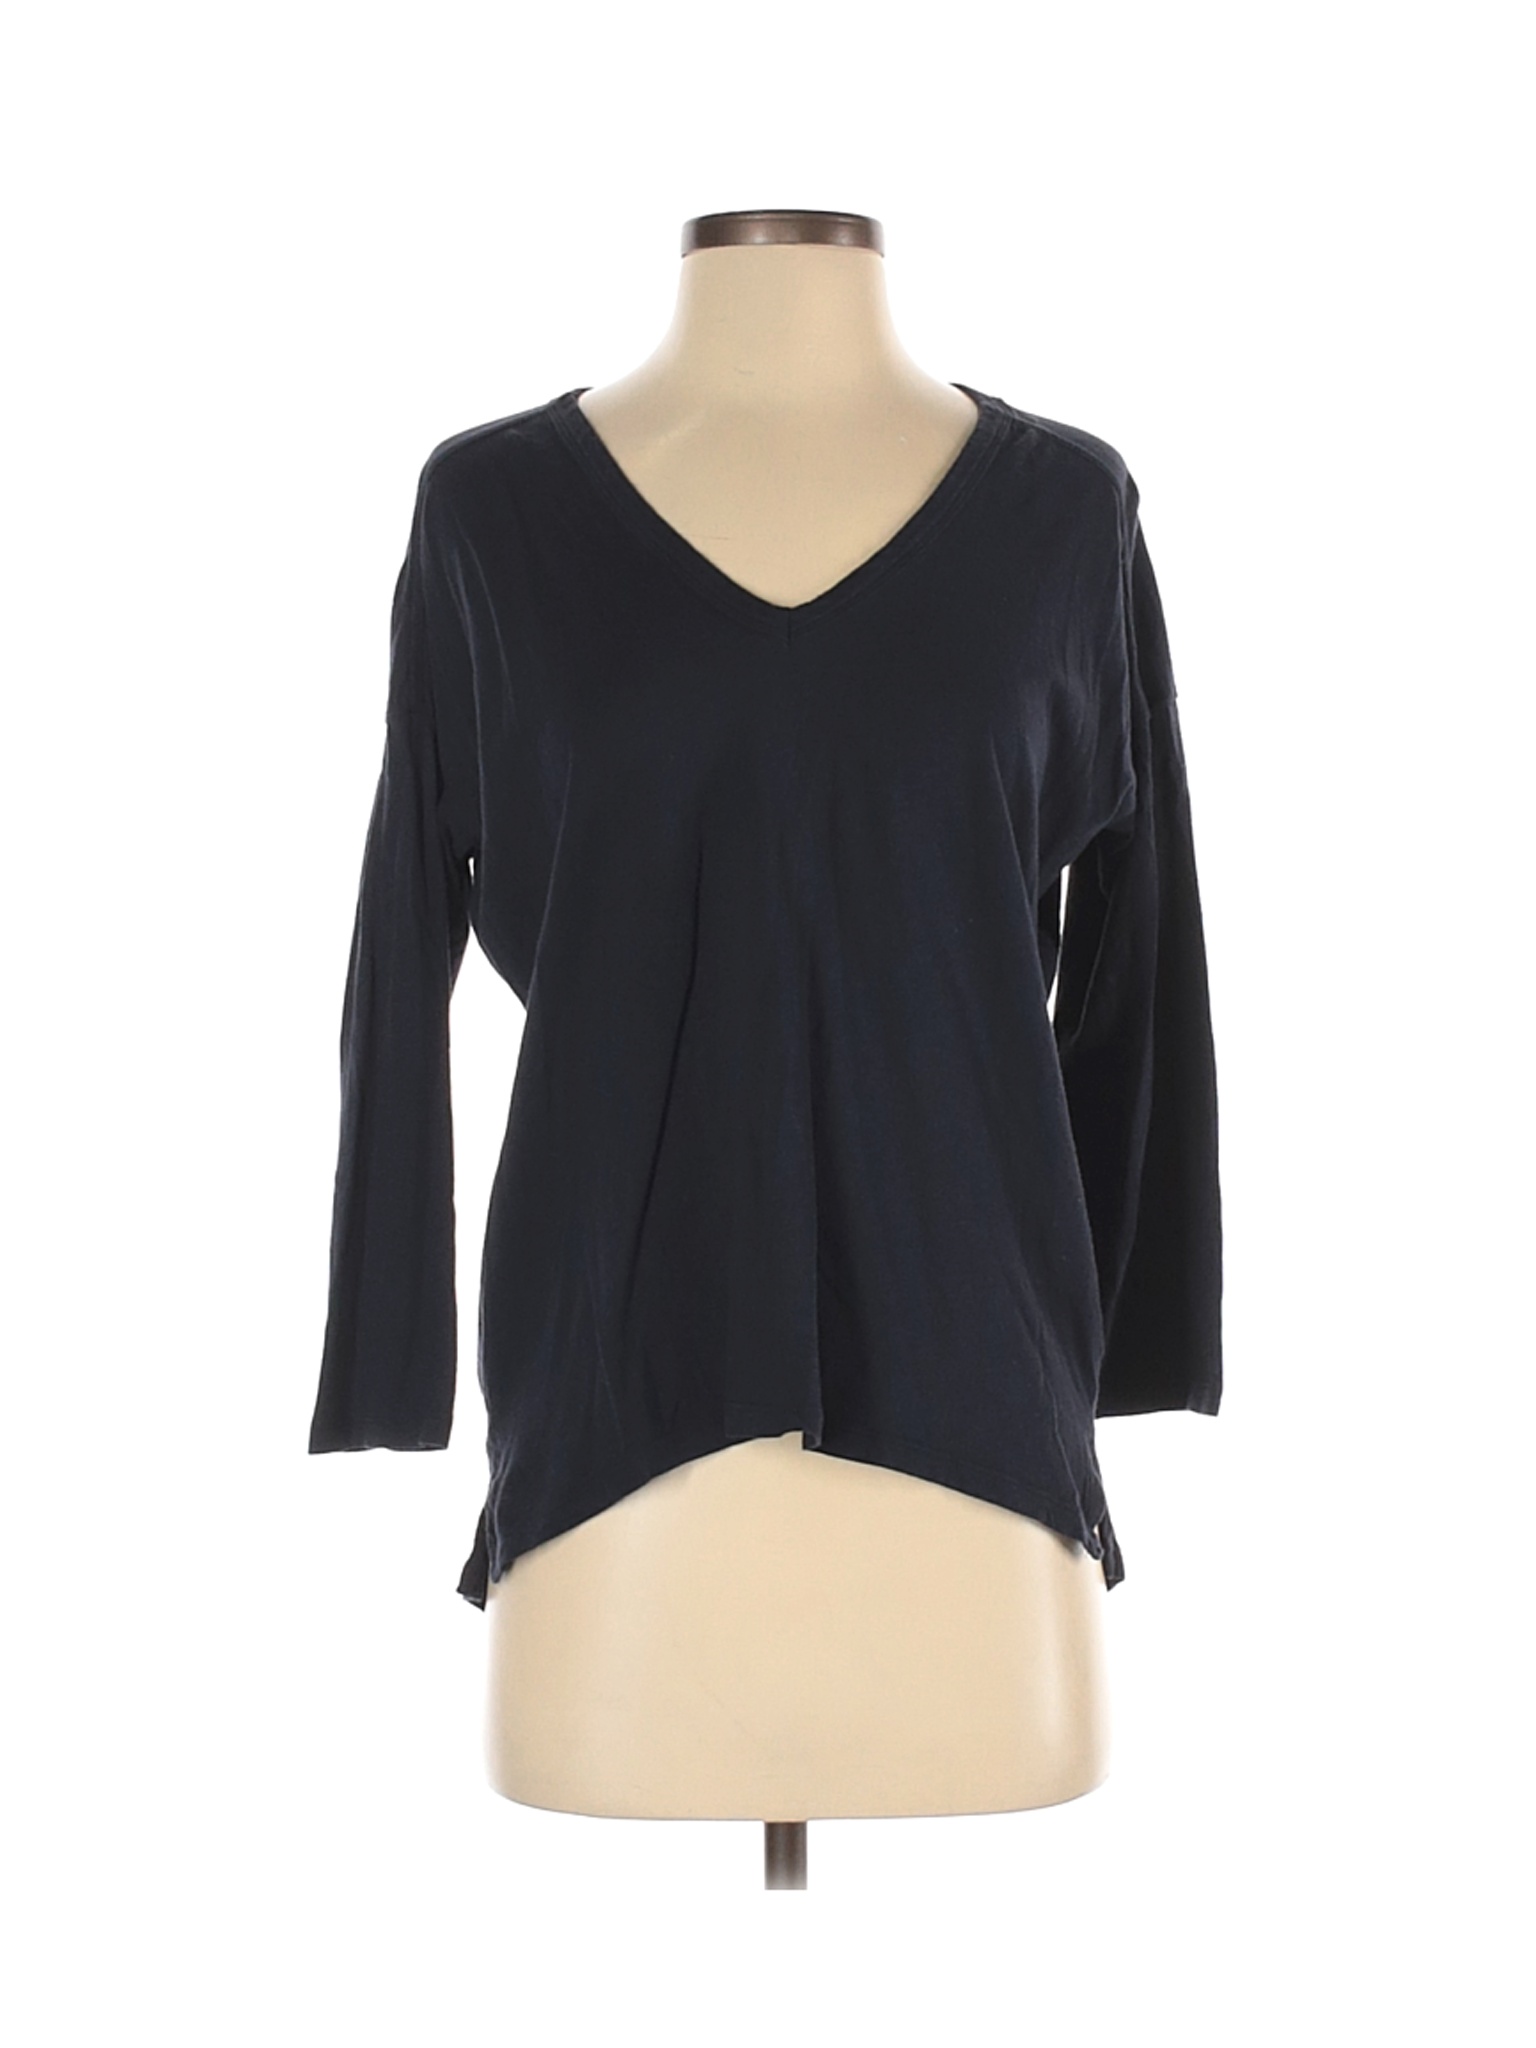 Gap Women Black Long Sleeve T-Shirt S | eBay